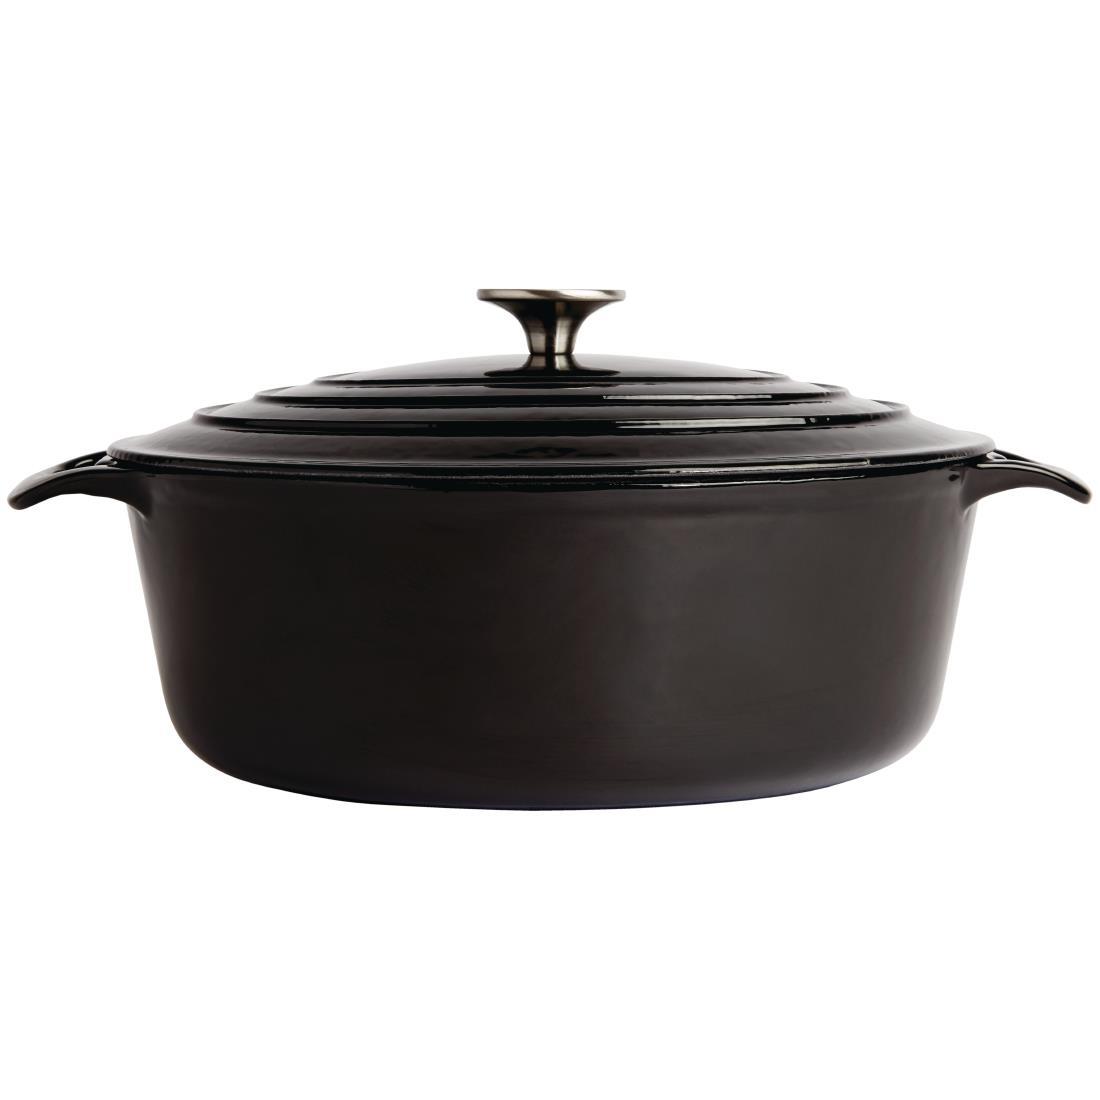 Vogue Black Oval Casserole Dish 6Ltr - GH310  - 3